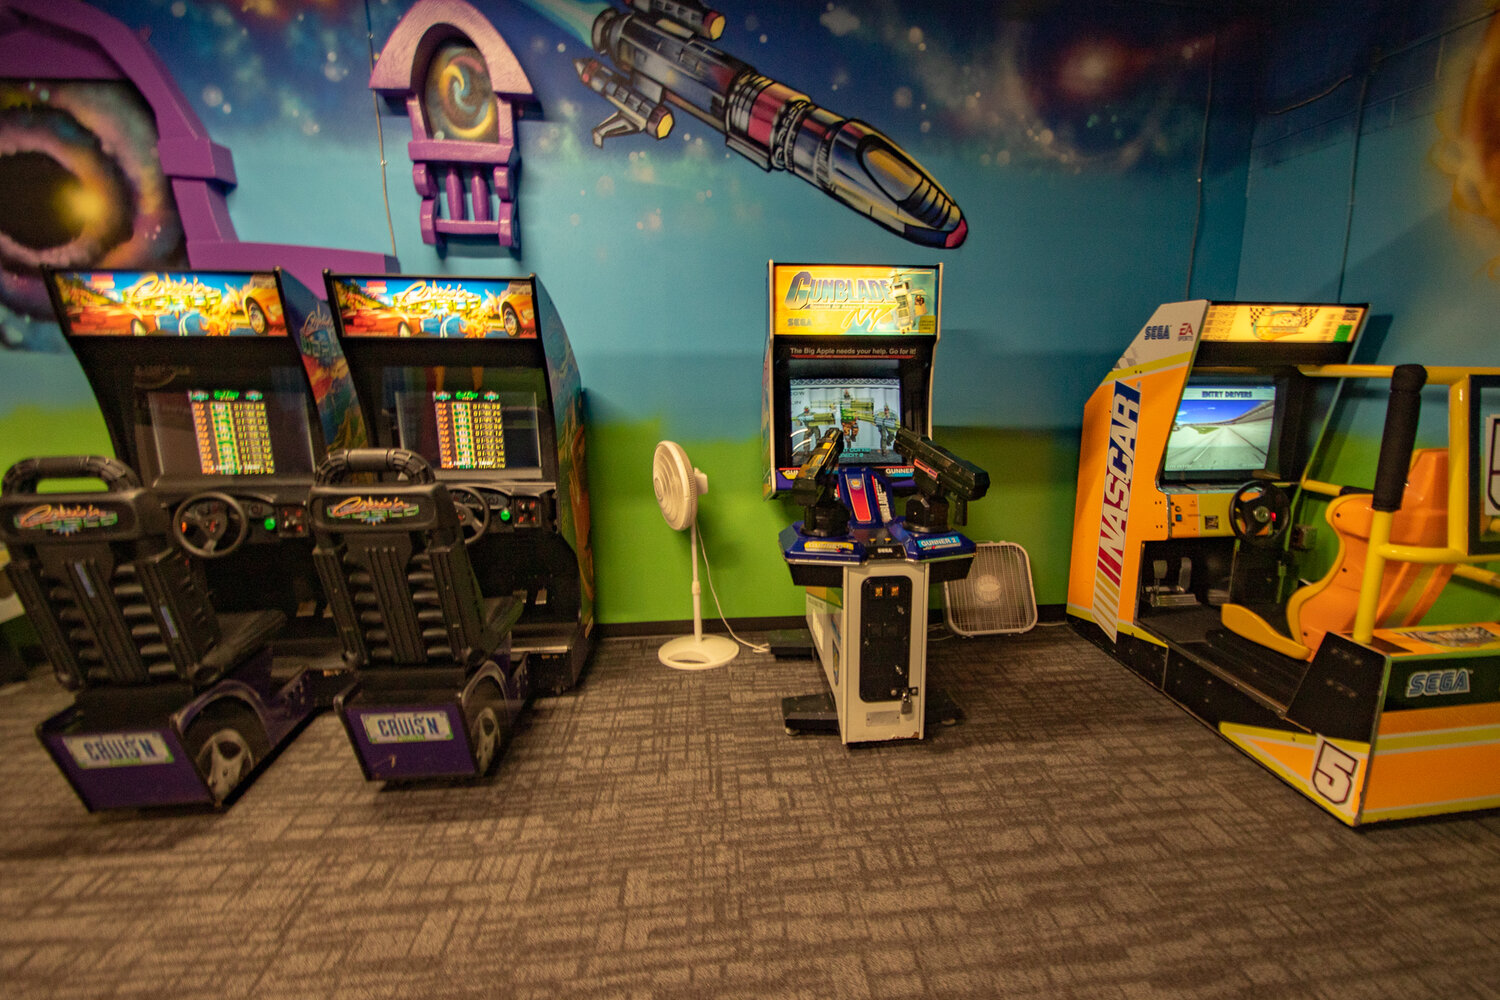 Arcade games line the wall at Shankz Black Light Miniature Golf on Thursday, Aug. 31.